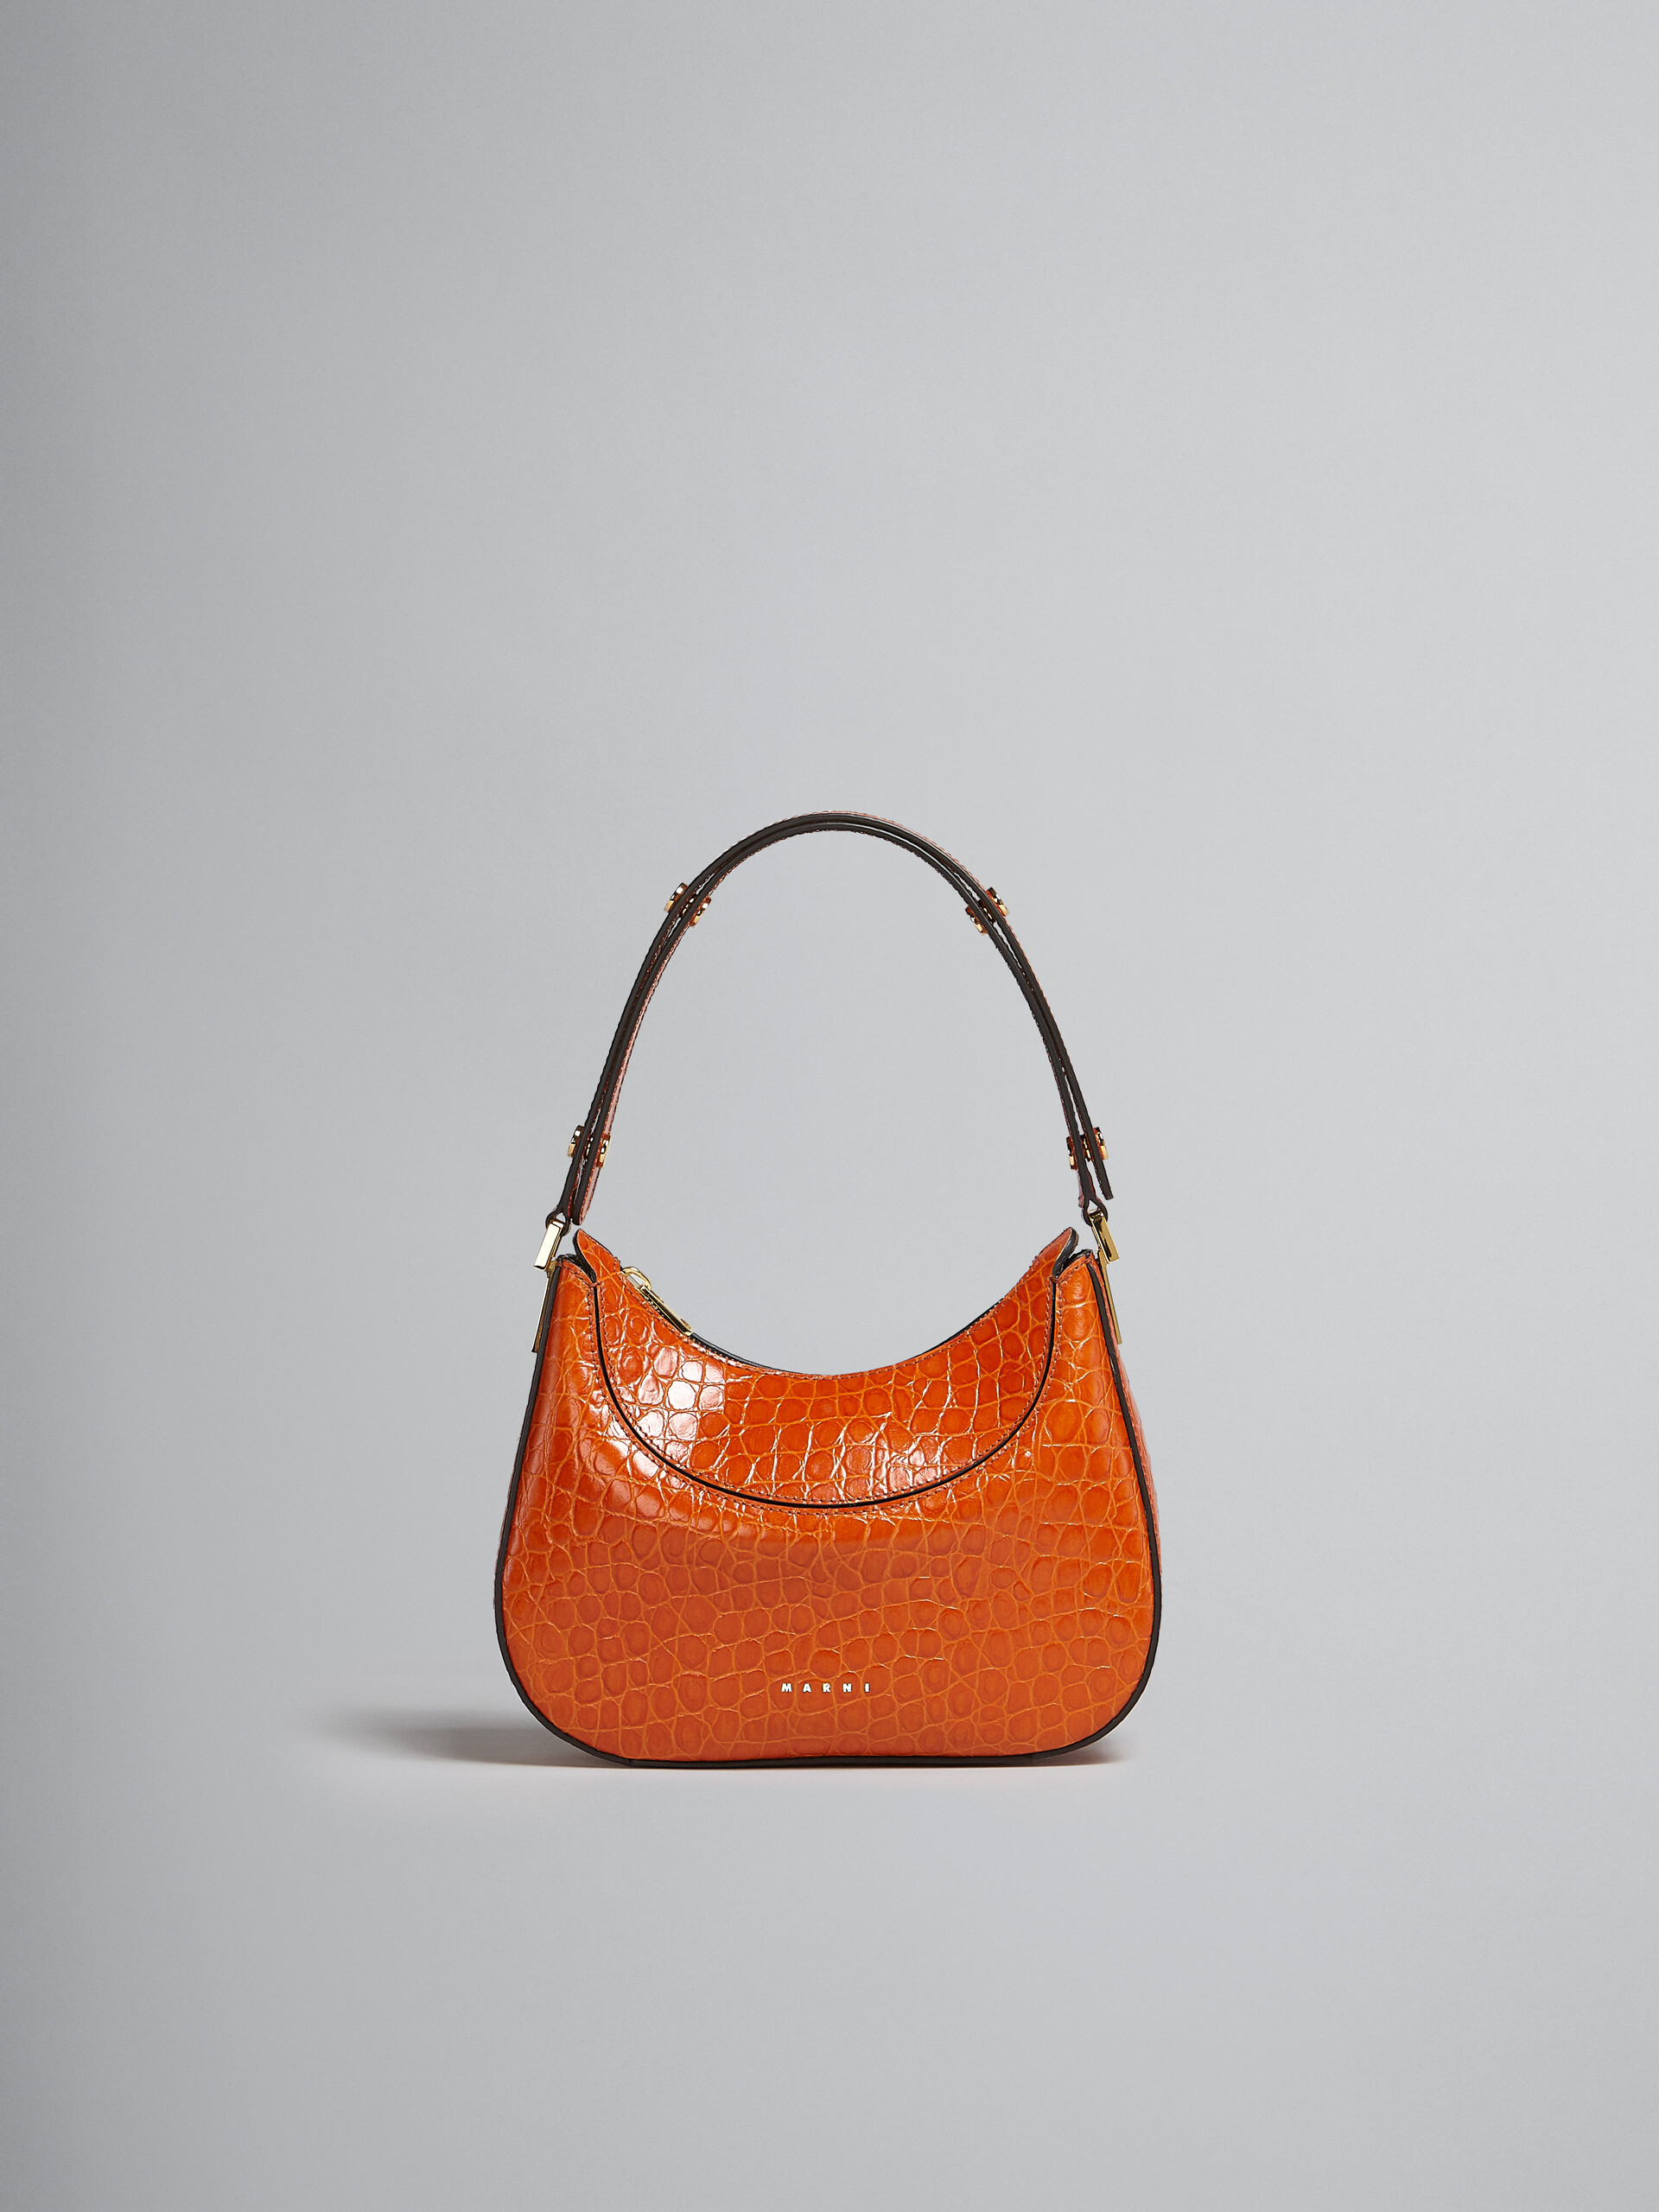 Milano Mini Bag in orange croco print leather - Handbags - Image 1